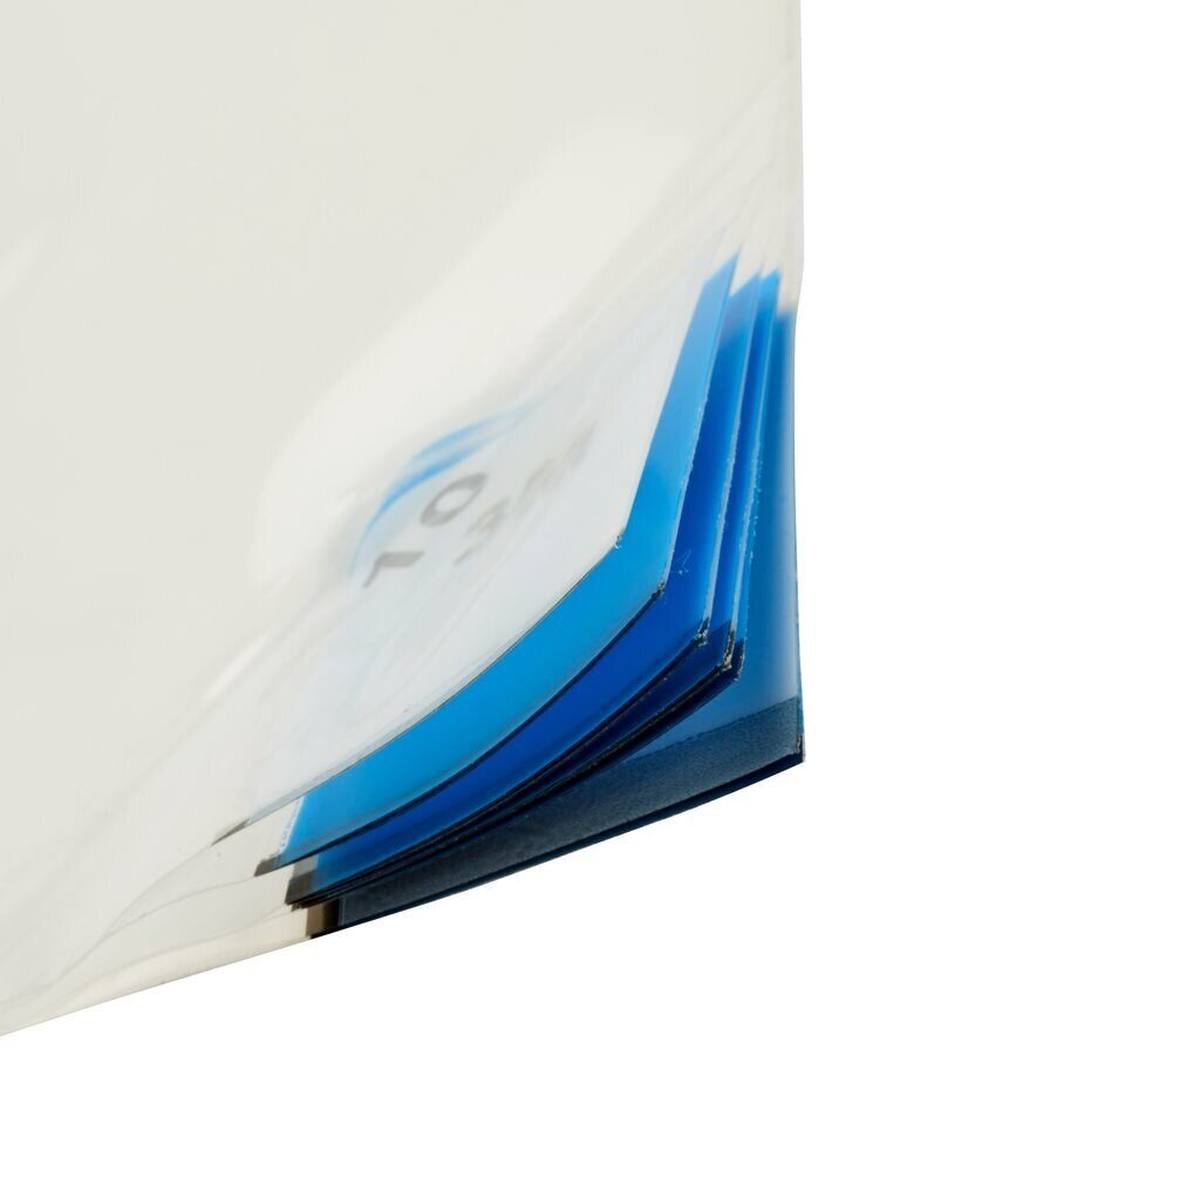 3M 4300 Nomad fine dust adhesive mat, white, 0.9m x 0.45m, 40 transparent polyethylene layers